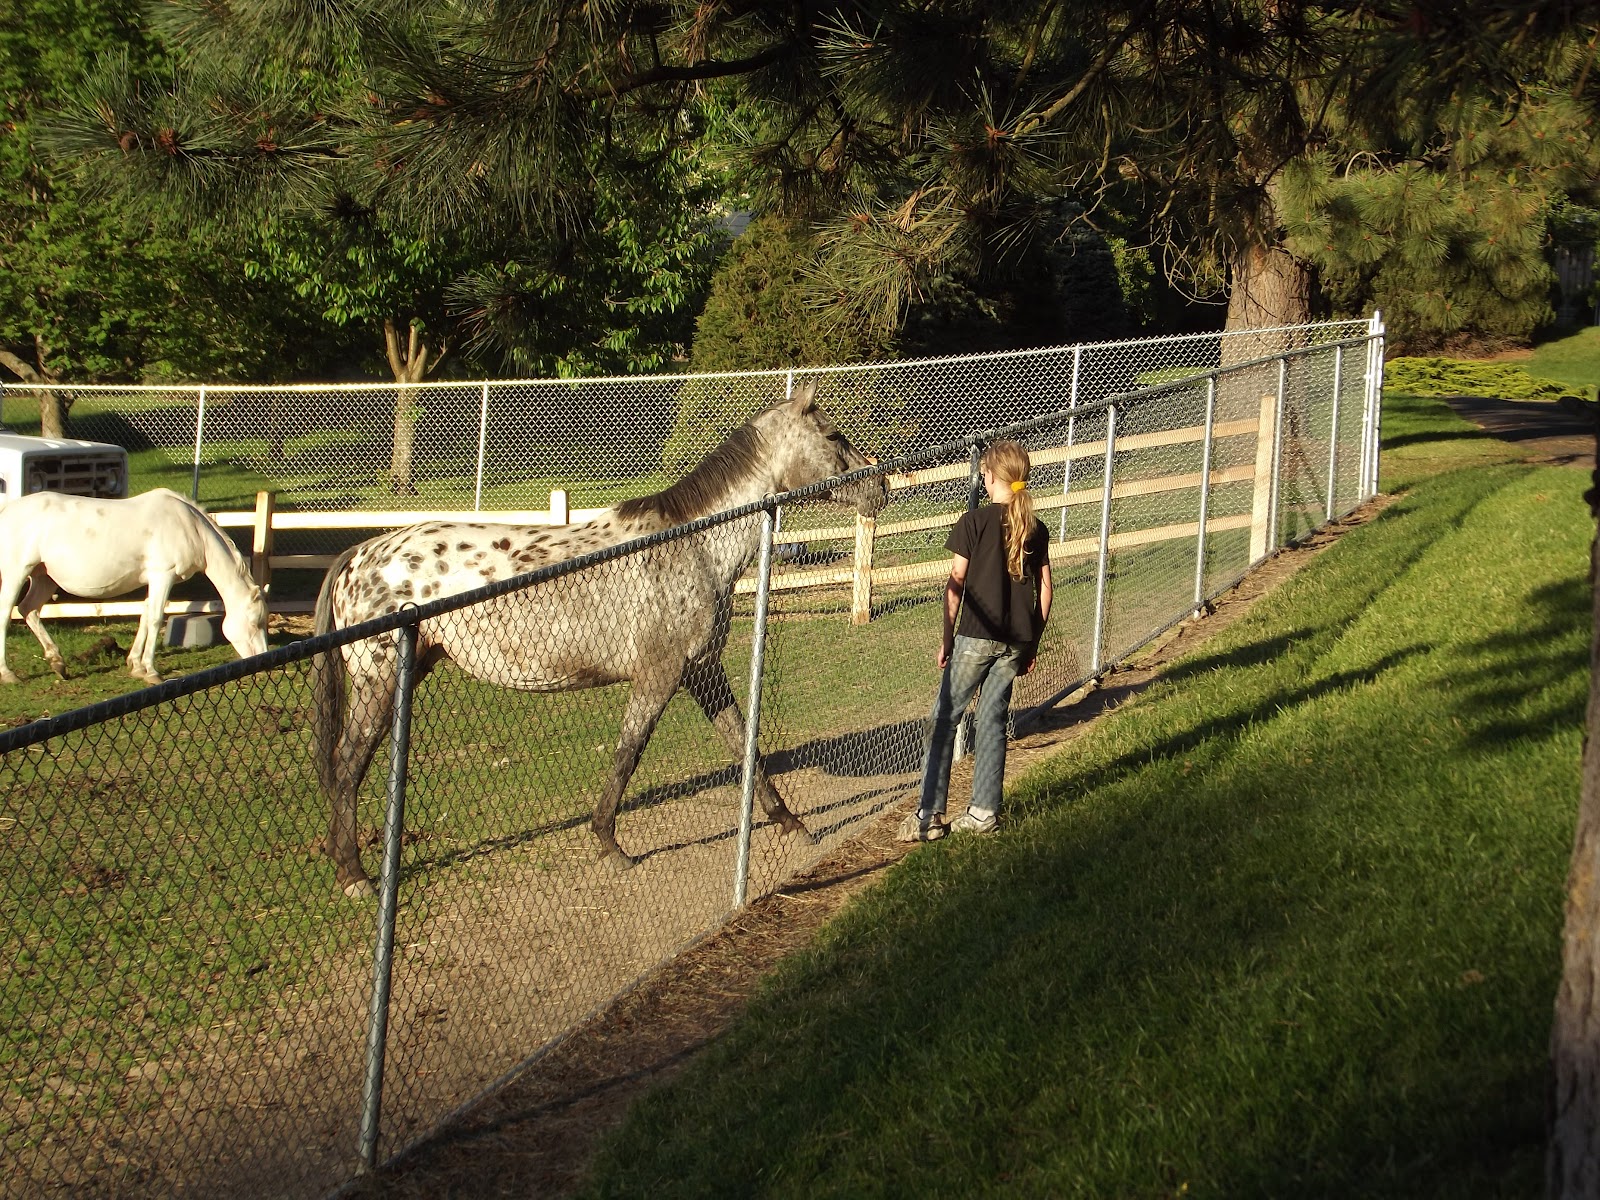 Boy petting horse through a fence